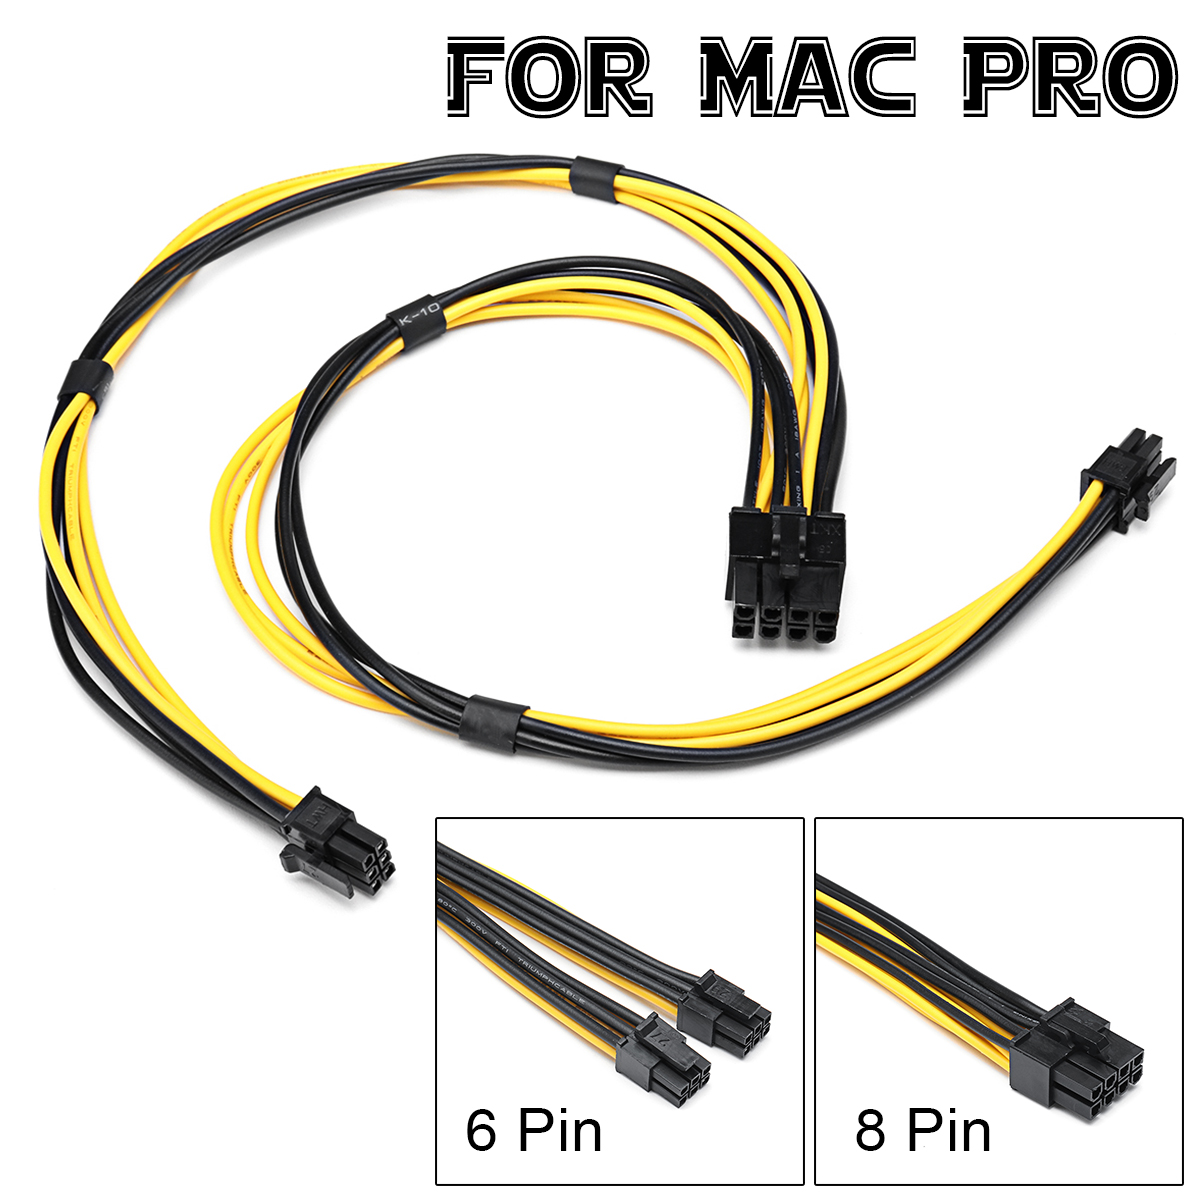 Dual-Mini-6-Pin-To-8-Pin-Male-PCI-E-Power-Cable-For-Mac-Pro-Video-Card-1344465-1